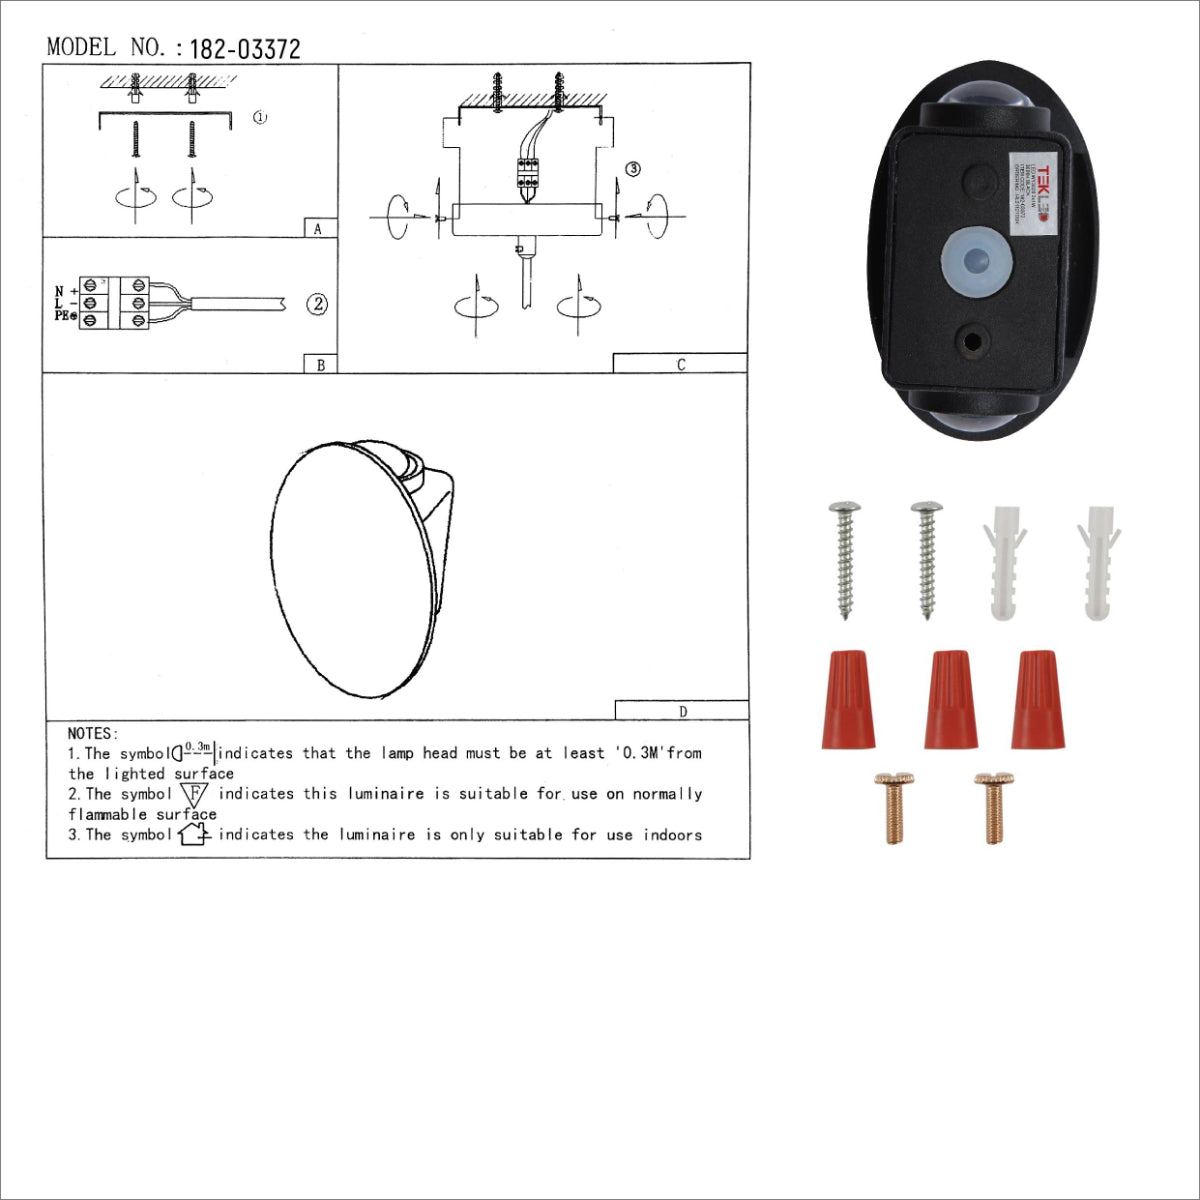 User manual for Black Ellipse Up Down Decorative Outdoor Modern LED Wall Light | TEKLED 182-03372